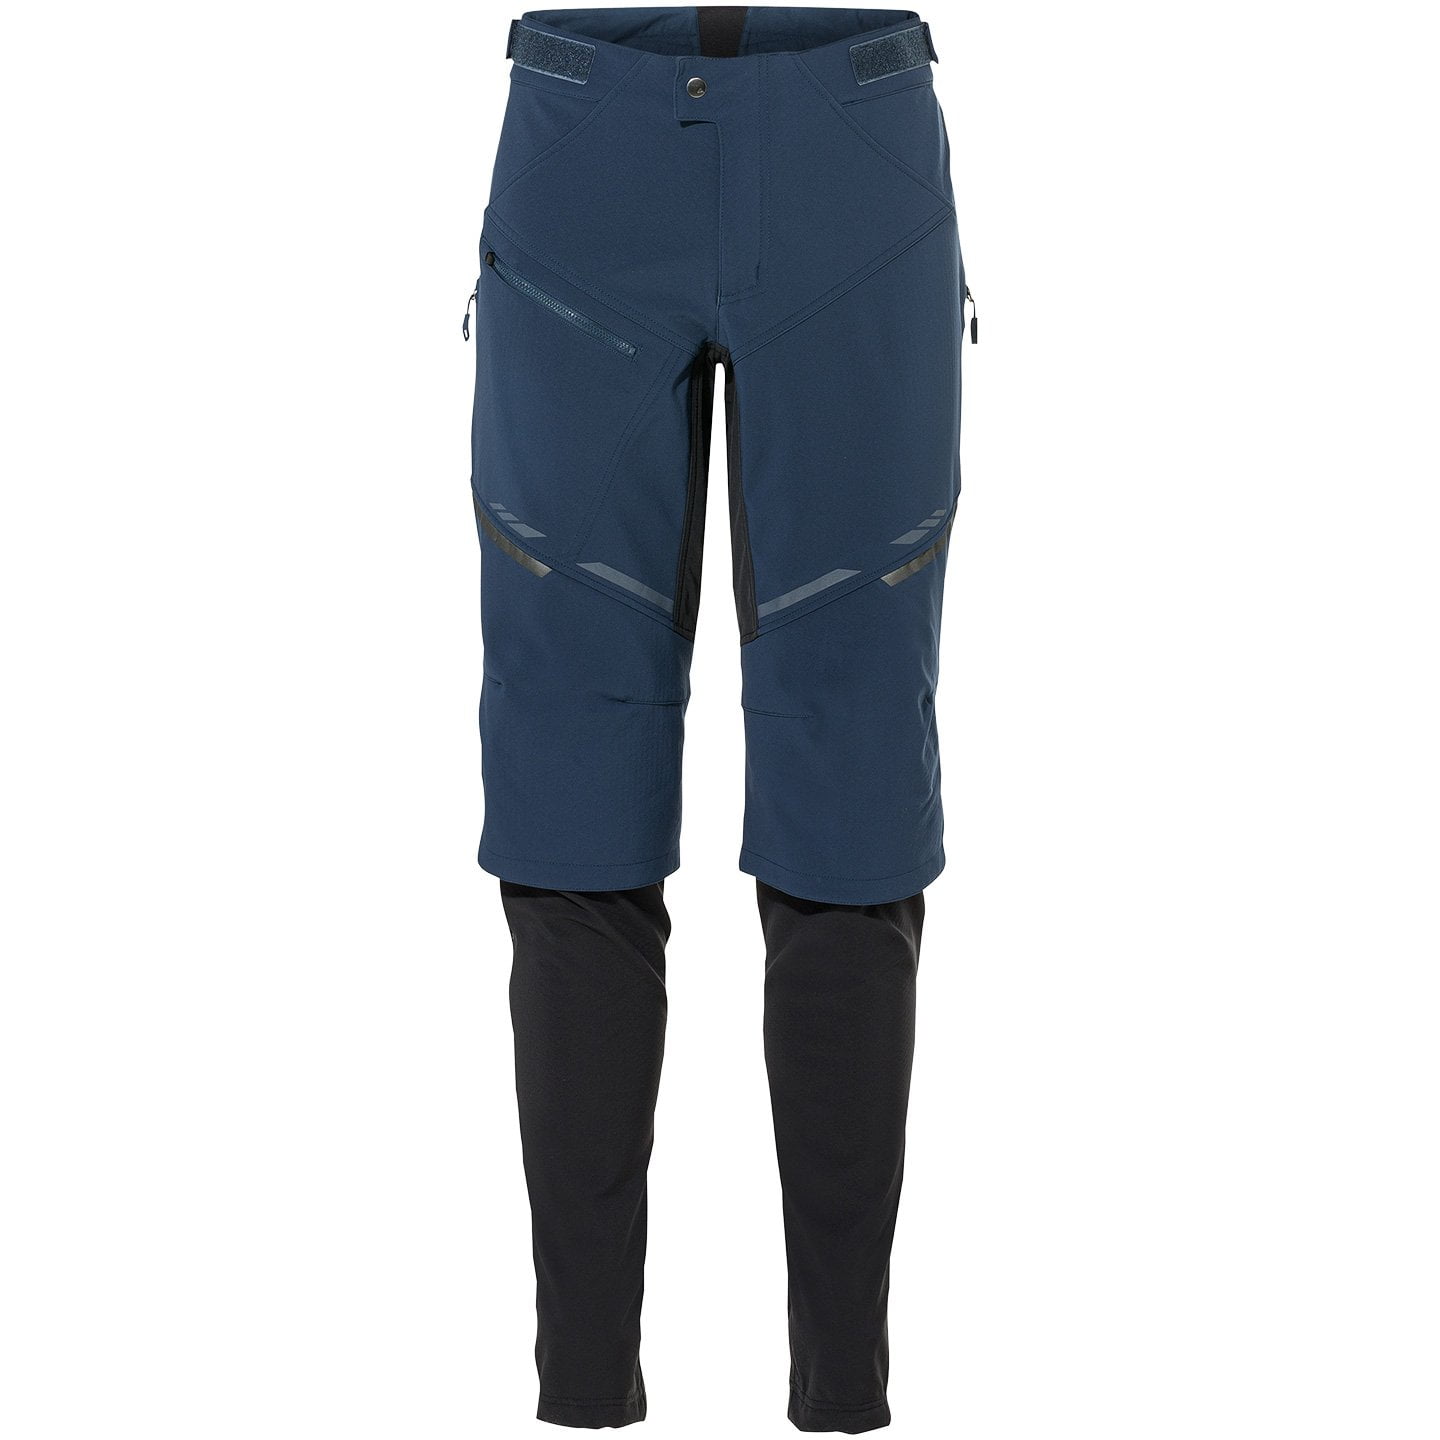 Virt II Long Bike Trousers w/o Pad Long Bike Pants, for men, size L, Cycle trousers, Cycle gear